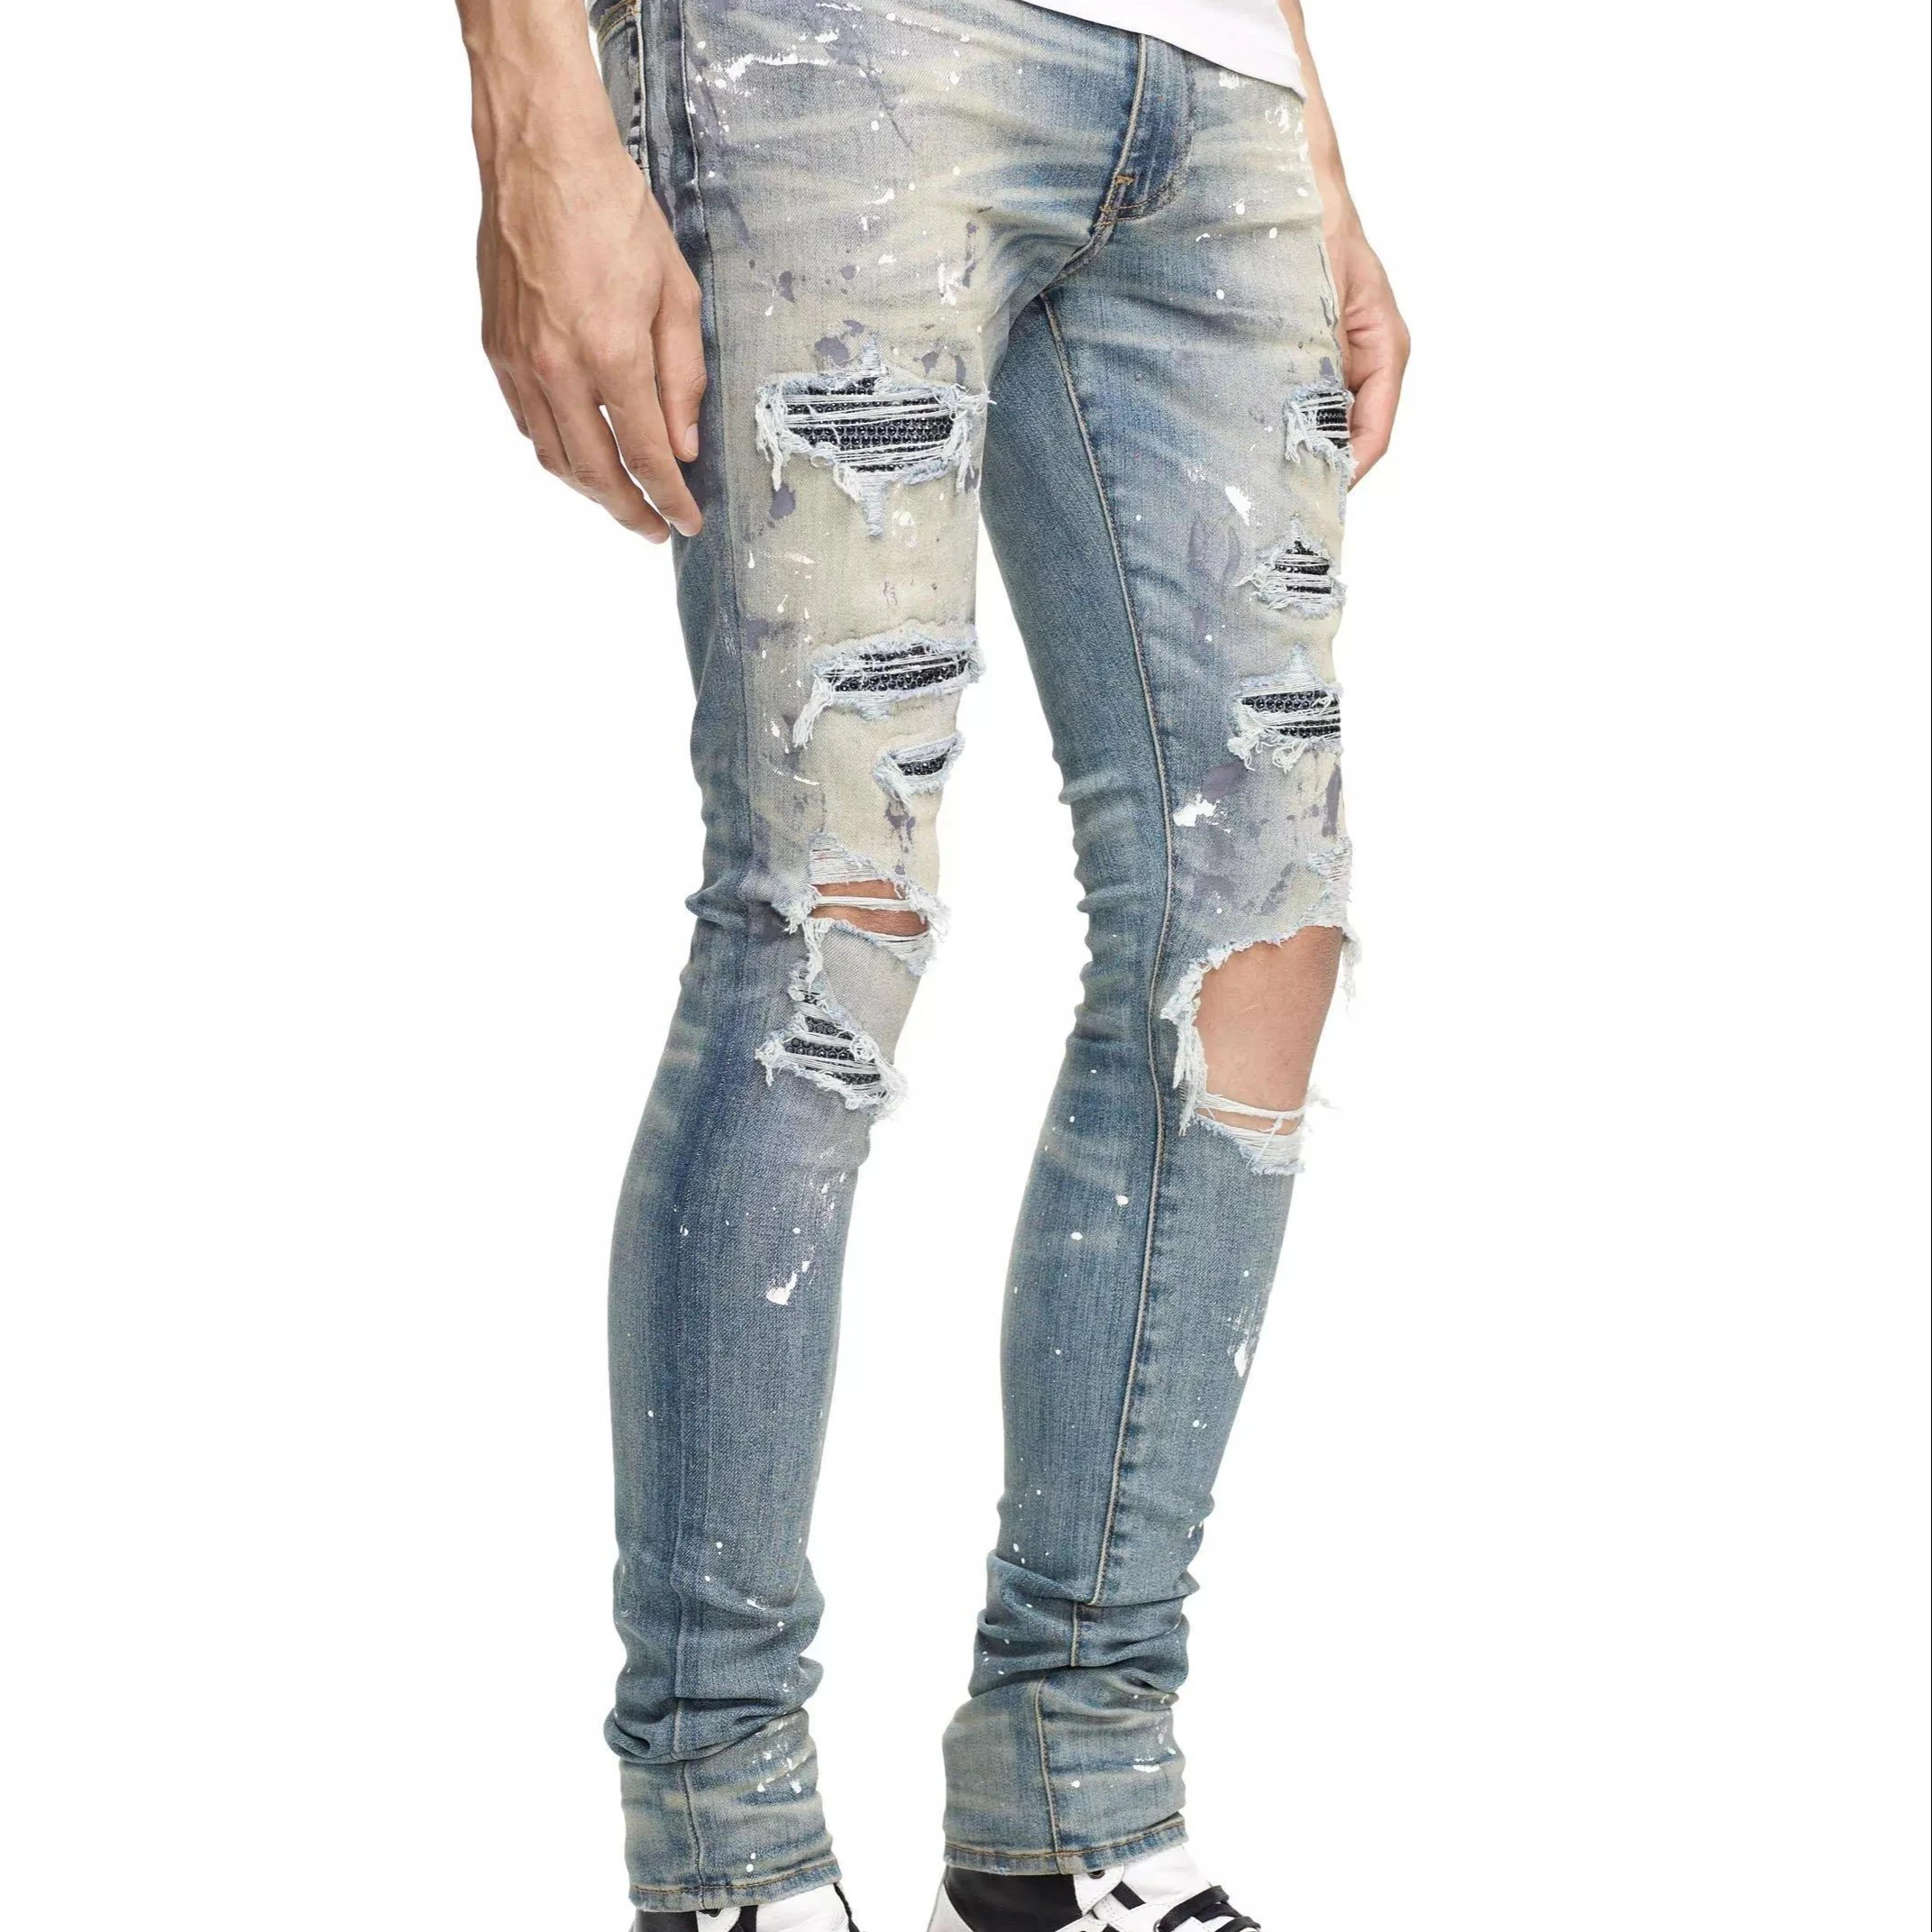 Ripped Skinny Men Jeans Fashion Design Elastic Waist Big Size European 